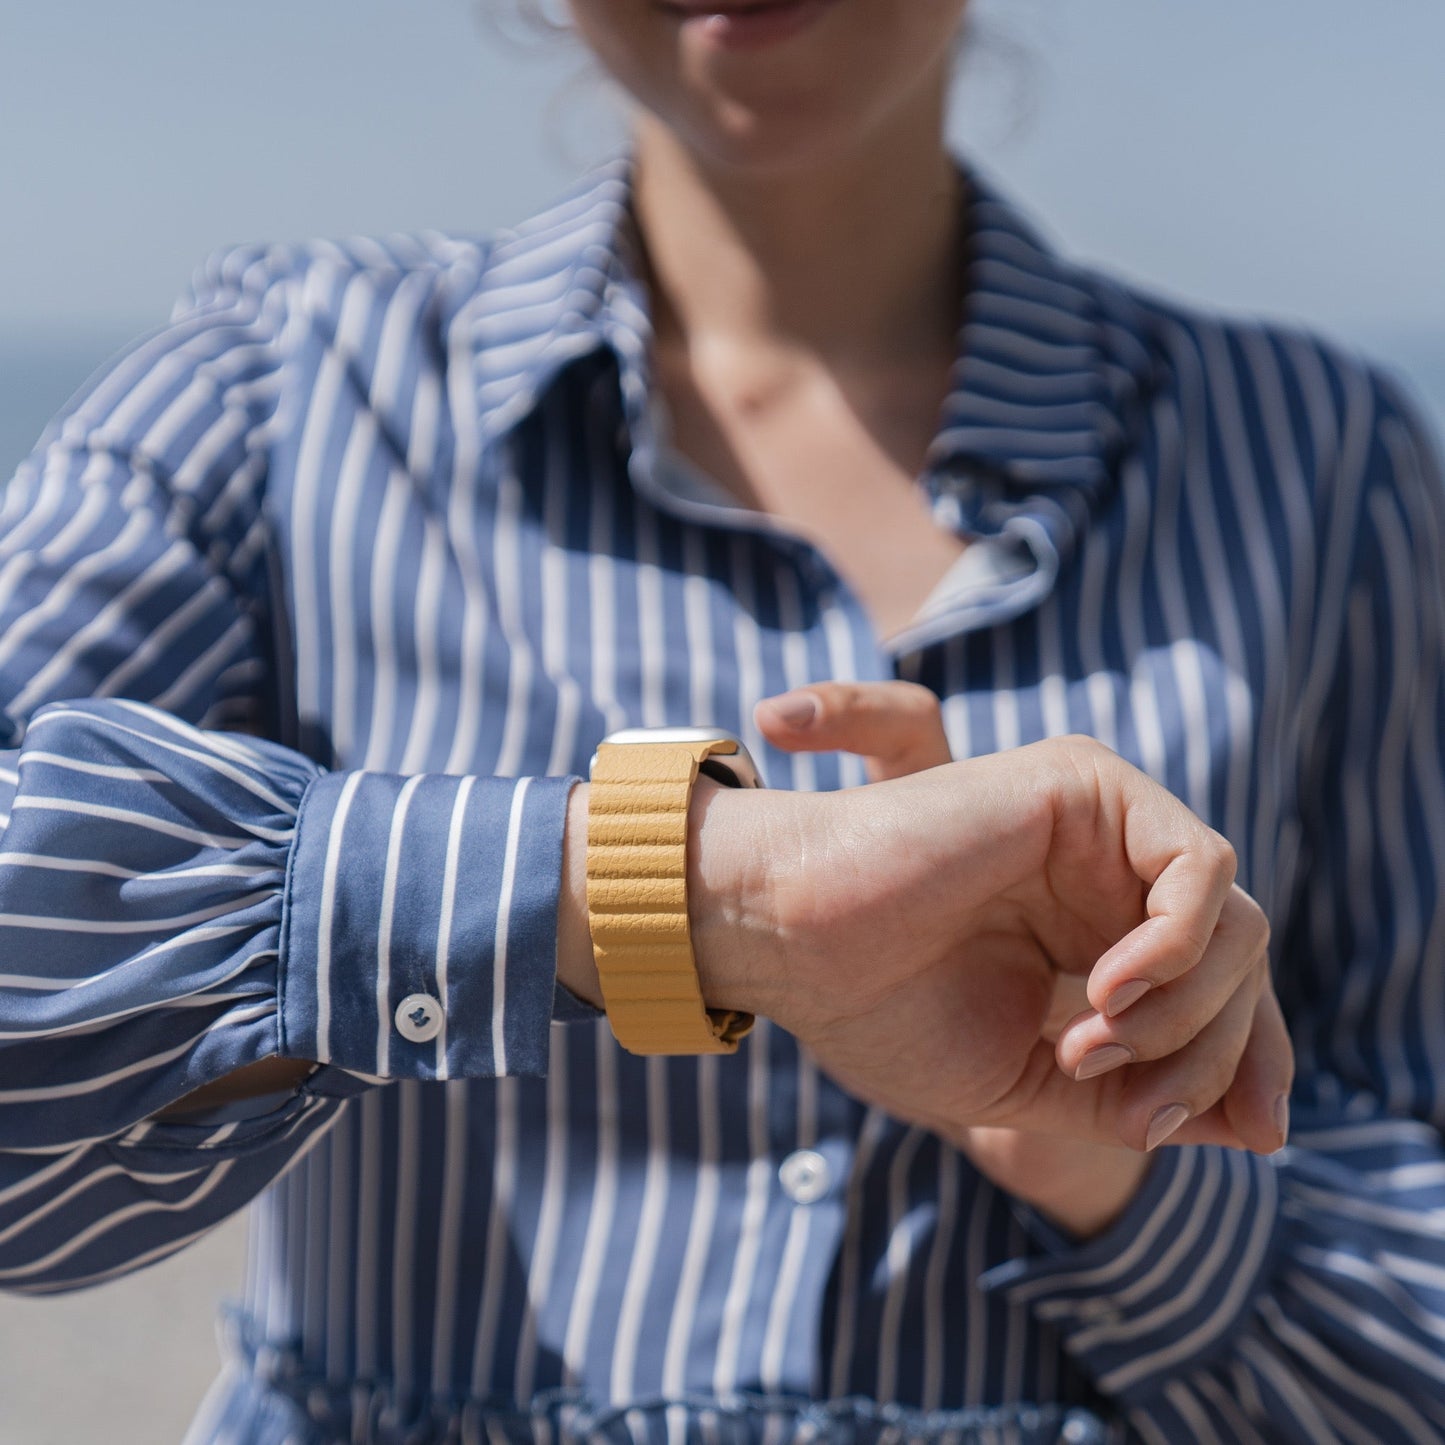 arktisband Apple Watch Kunstleder Loop Armband